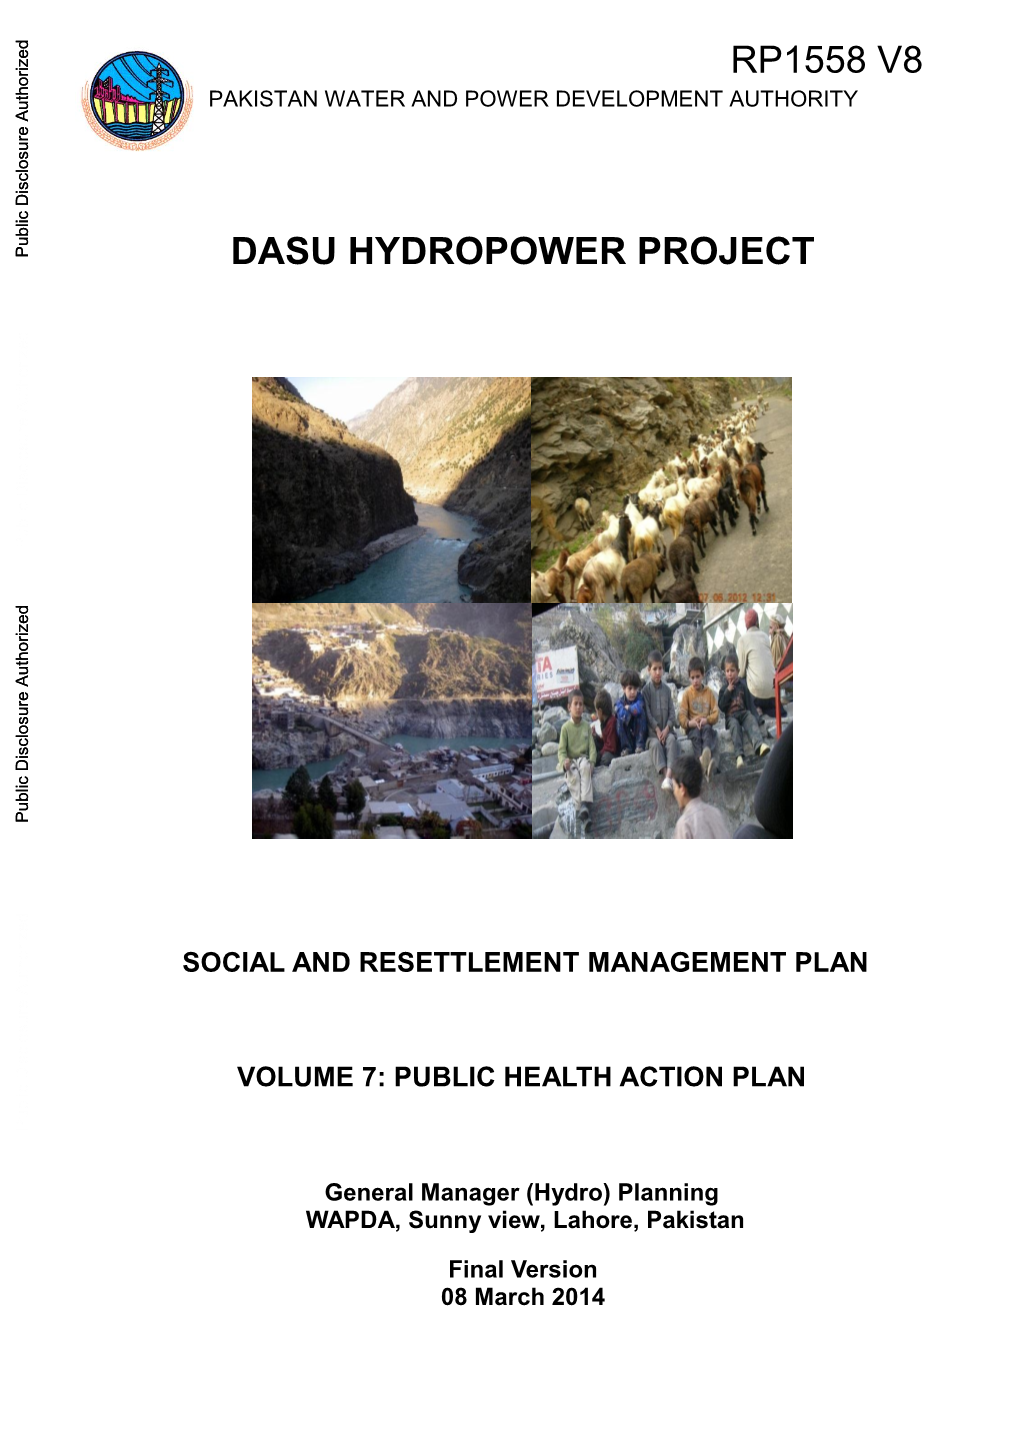 Pakistan Water and Power Development Authority